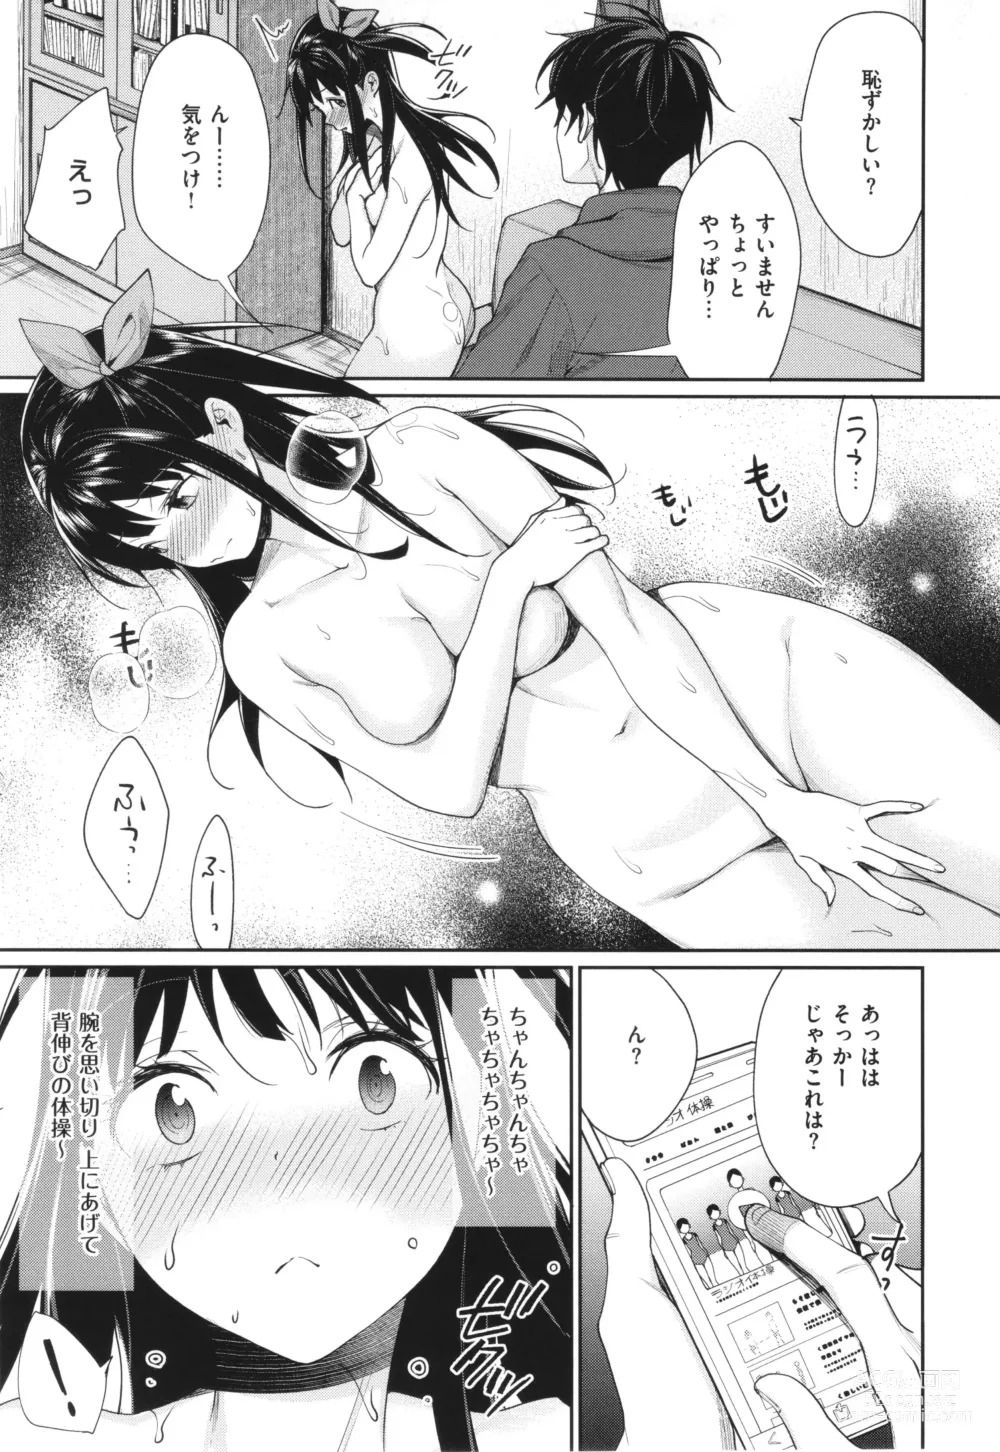 Page 26 of manga You & I